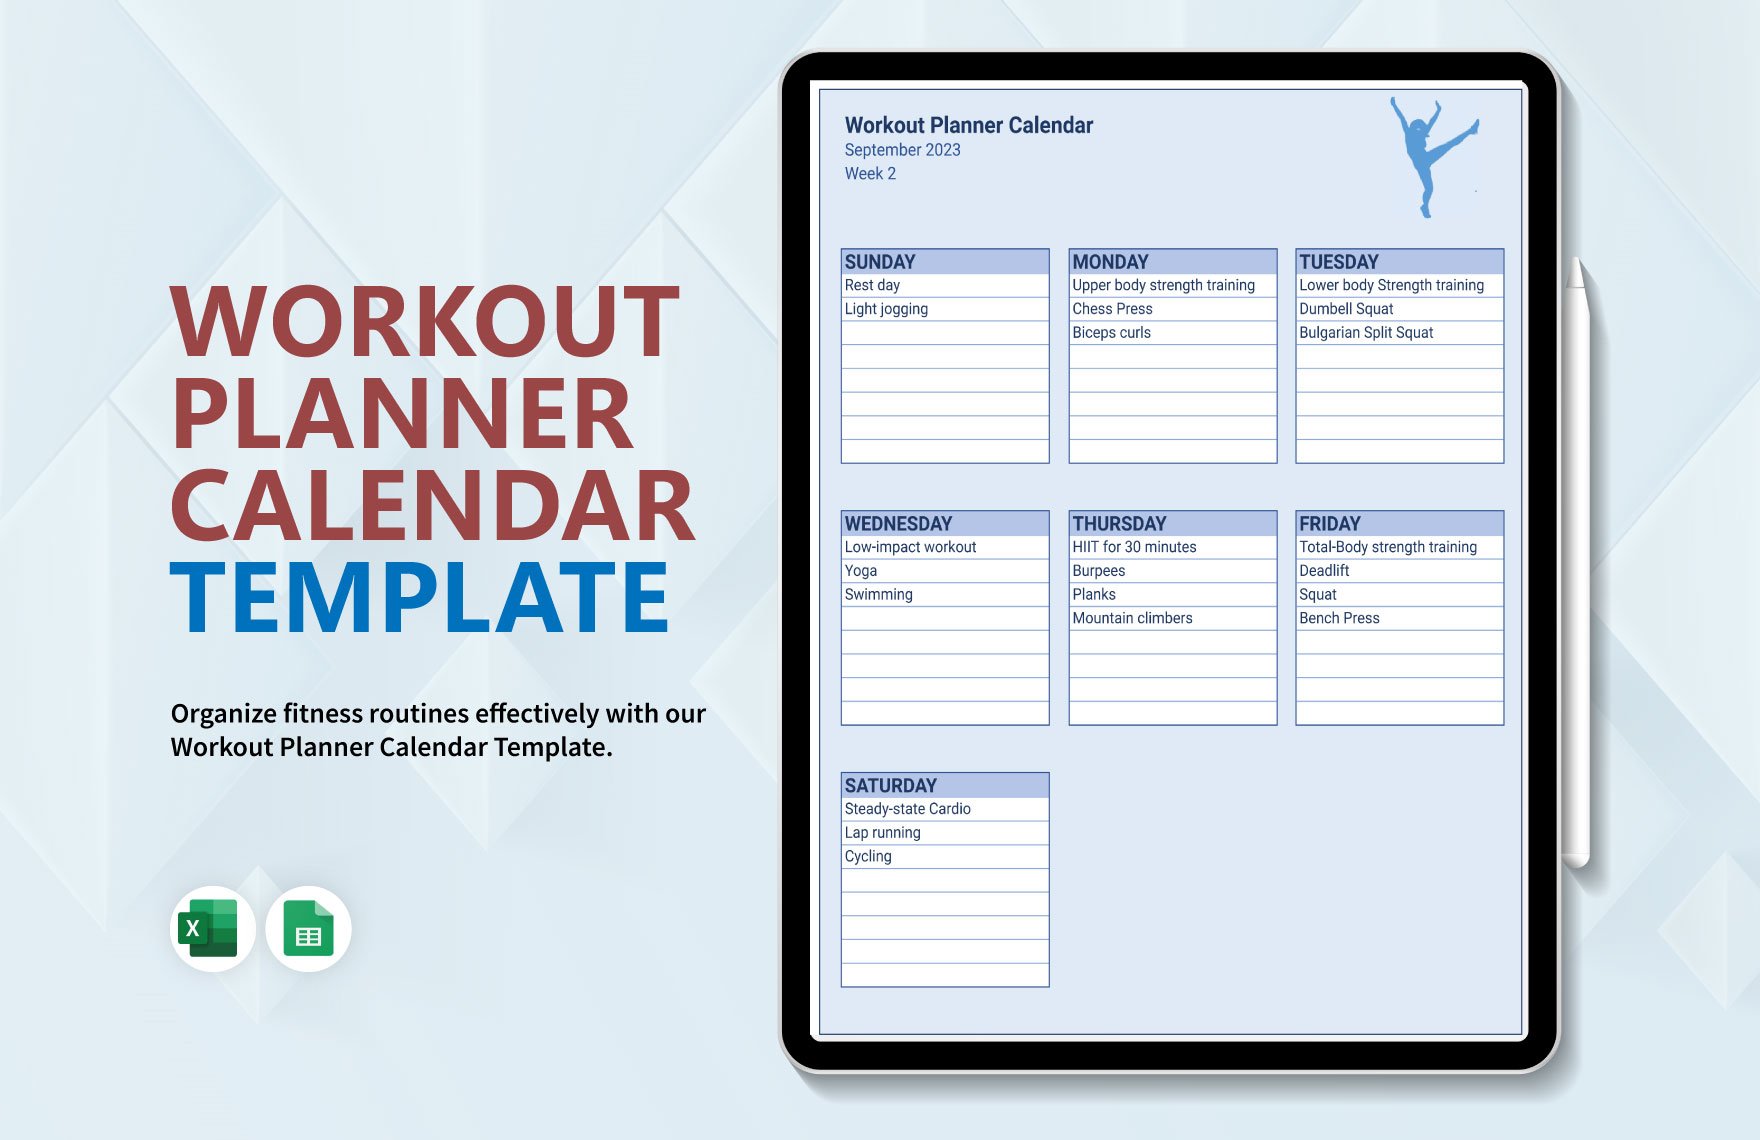 Workout Planner Calendar in Excel, Google Sheets